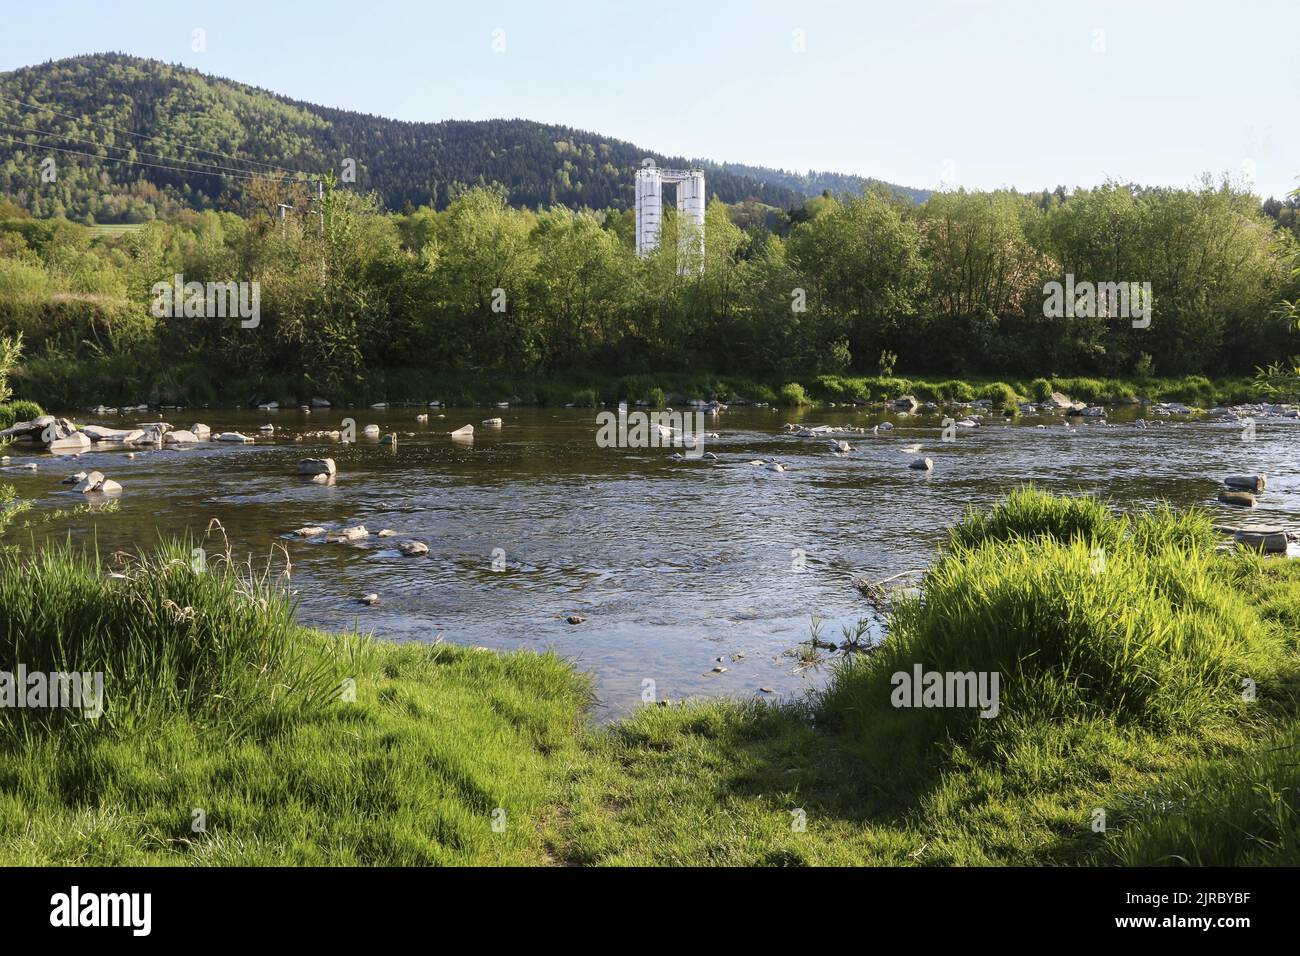 Calm river in mountain region. Tourists destination Stock Photo